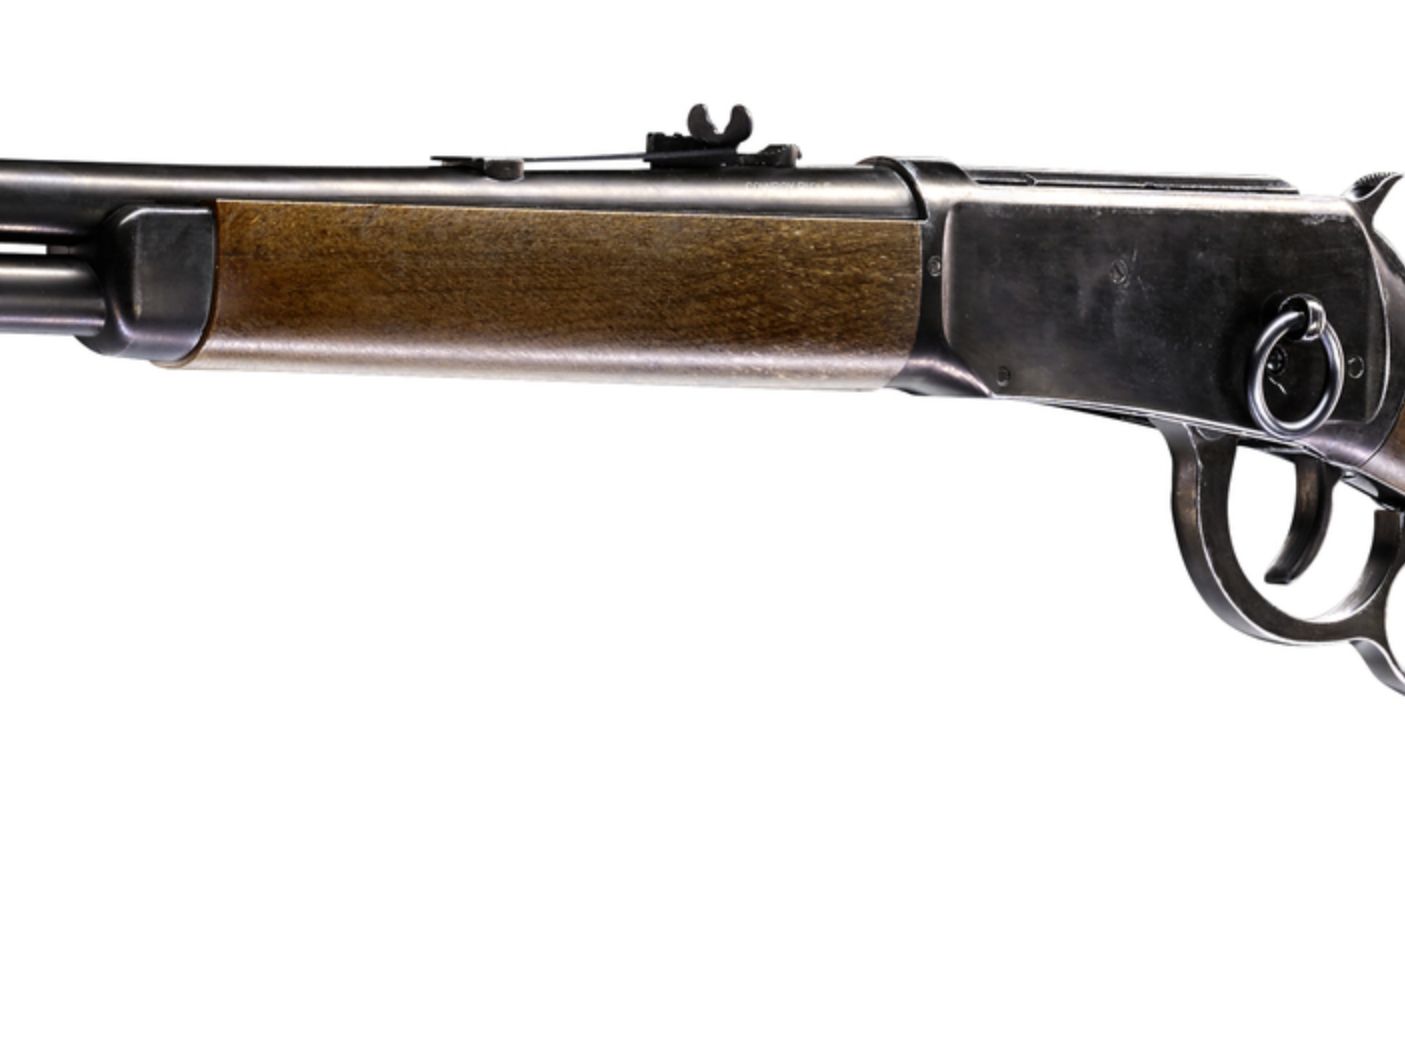 Umarex 5.8394-1 Legends Cowboy Rifle 4,5 mm (.177) BB, CO₂, < 7,5 J, Antik-Finish